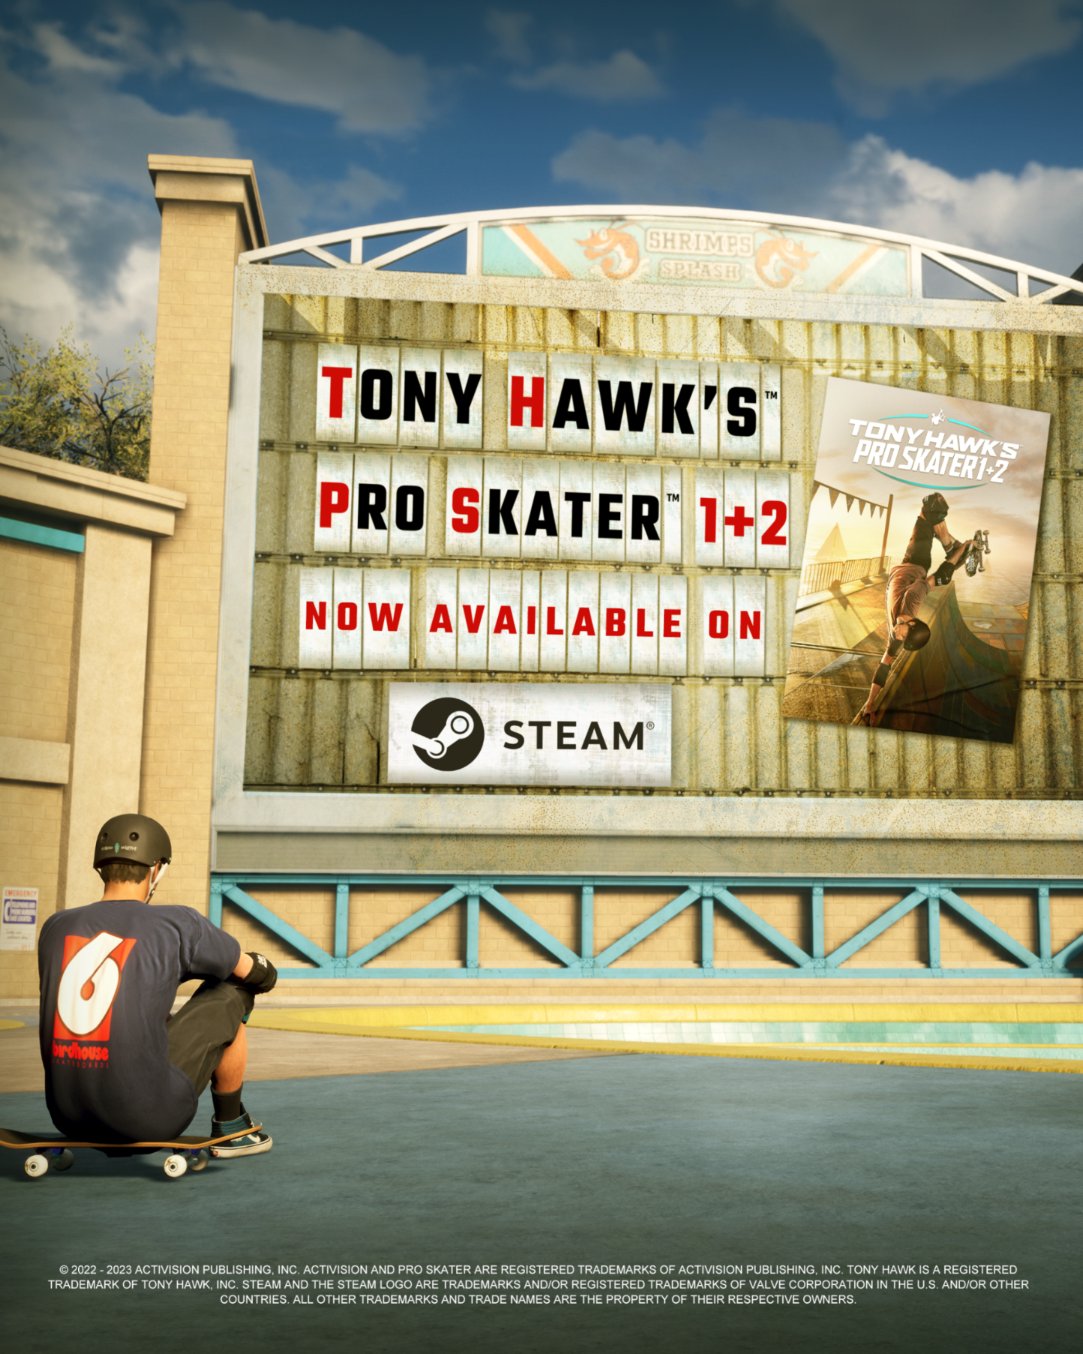 Jogo Xbox One Tony Hawk's Pro Skater 1+2